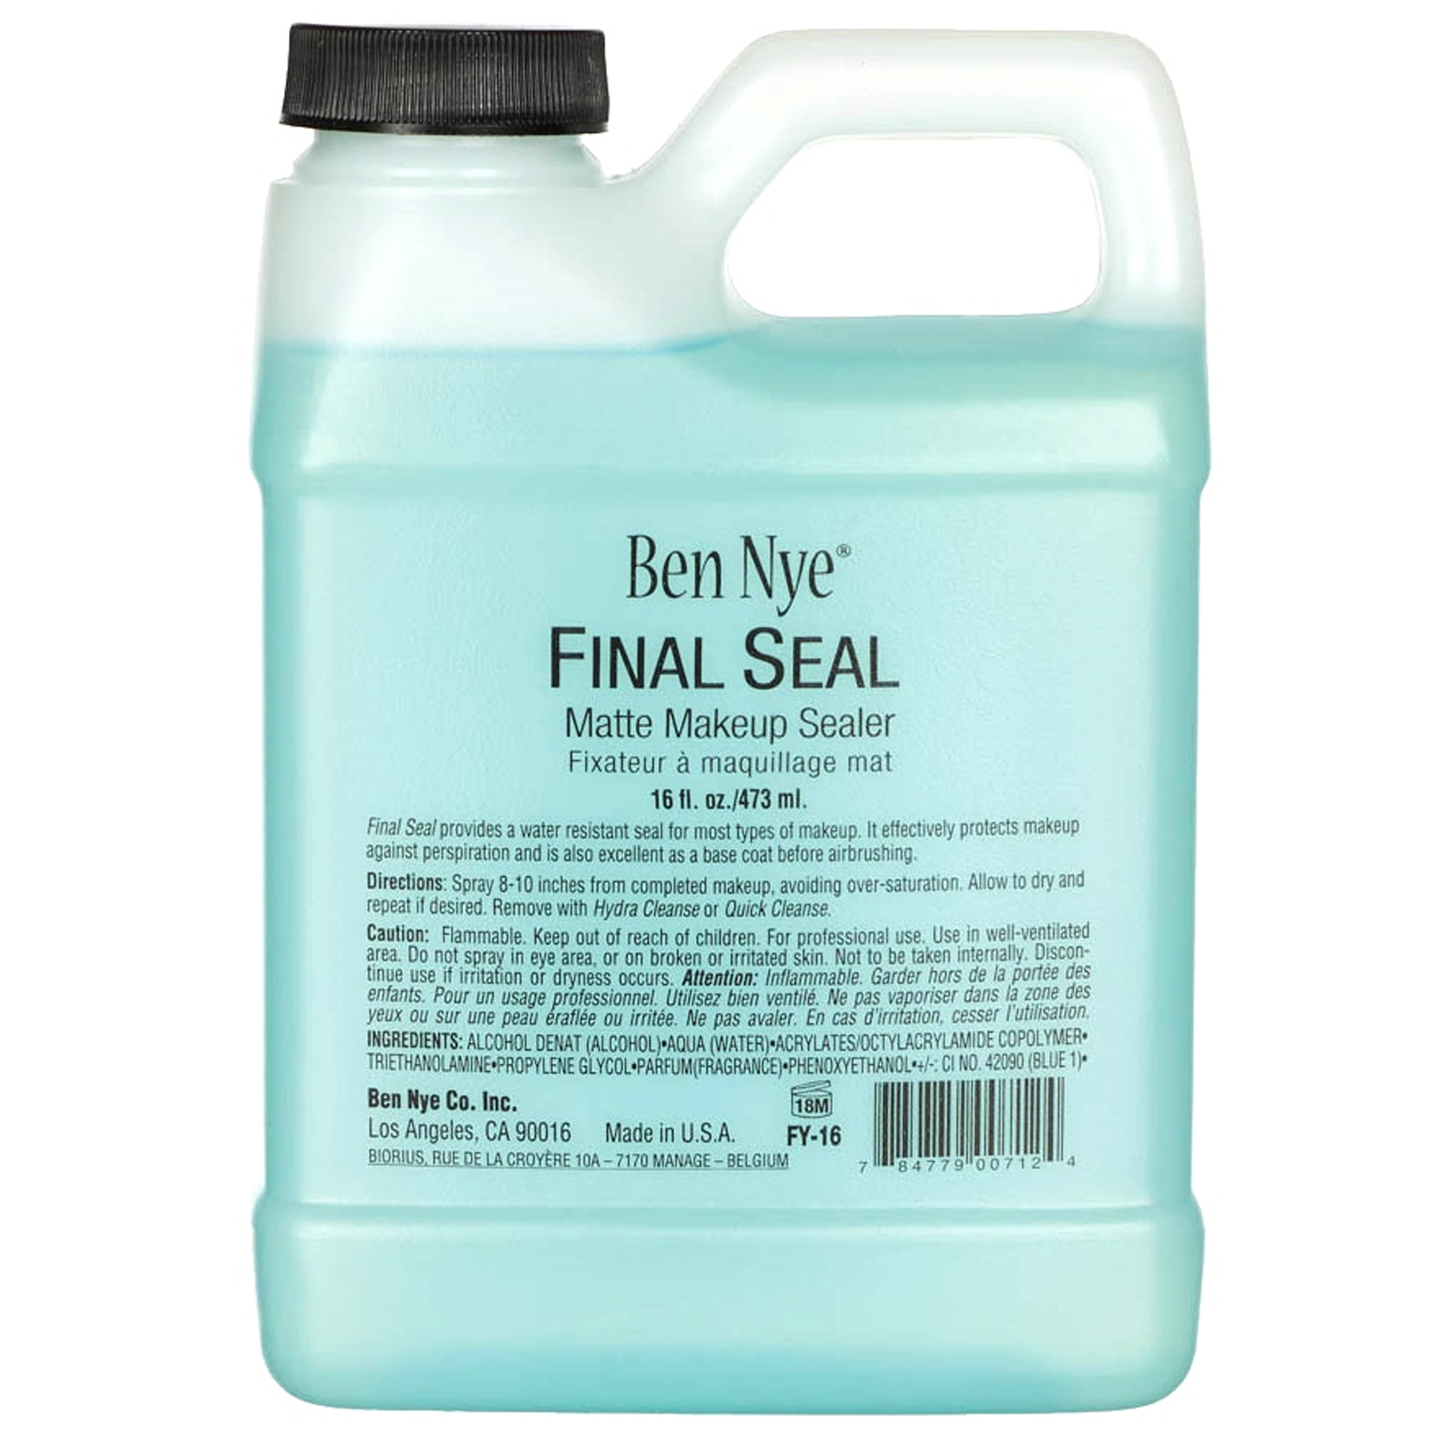 Ben Nye Final Seal